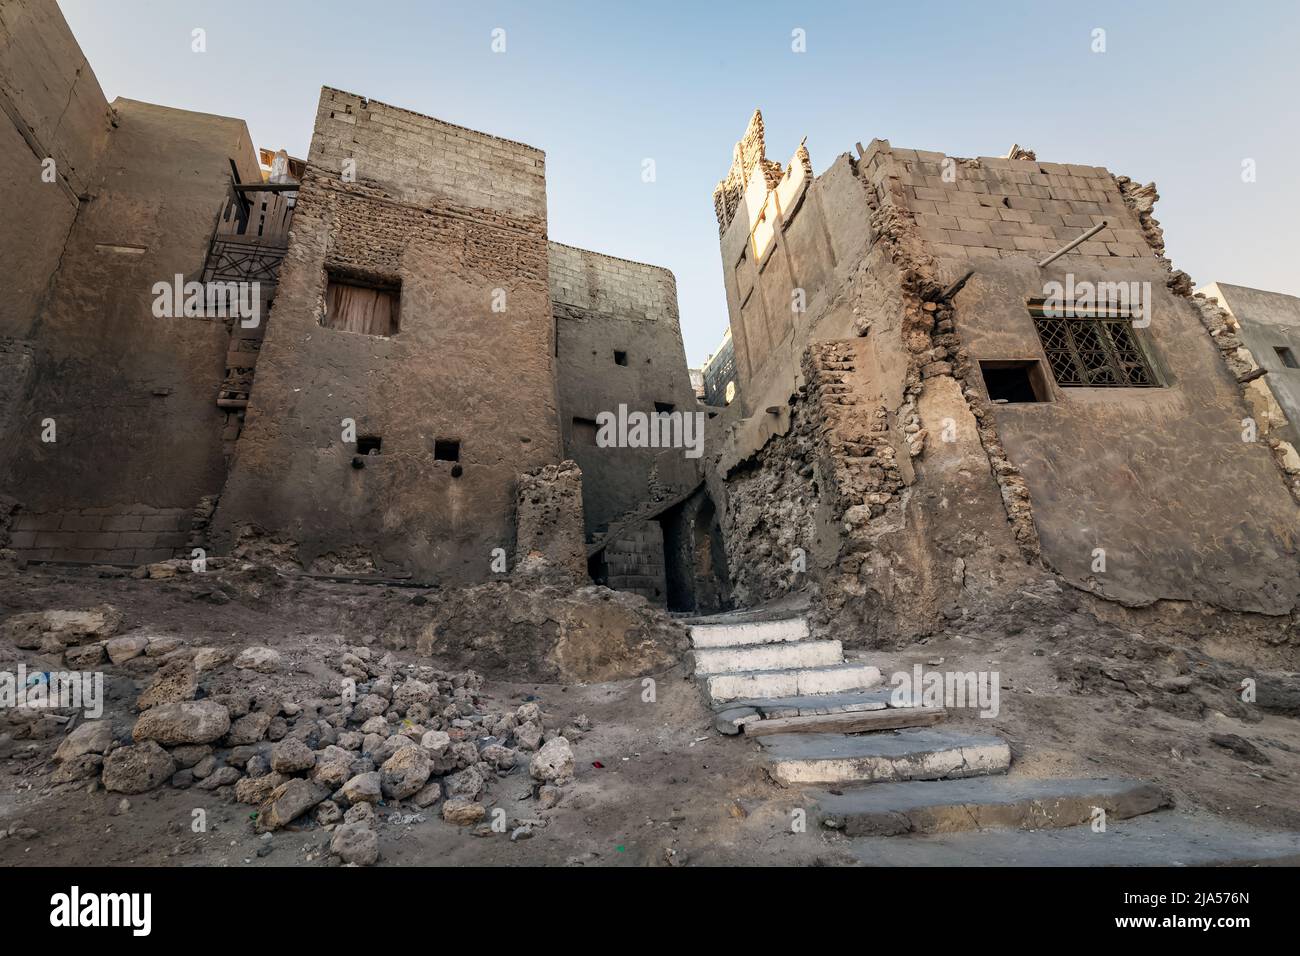 Ruined Building near Tarout Castle, Qatif, Saudi Arabia. Stock Photo